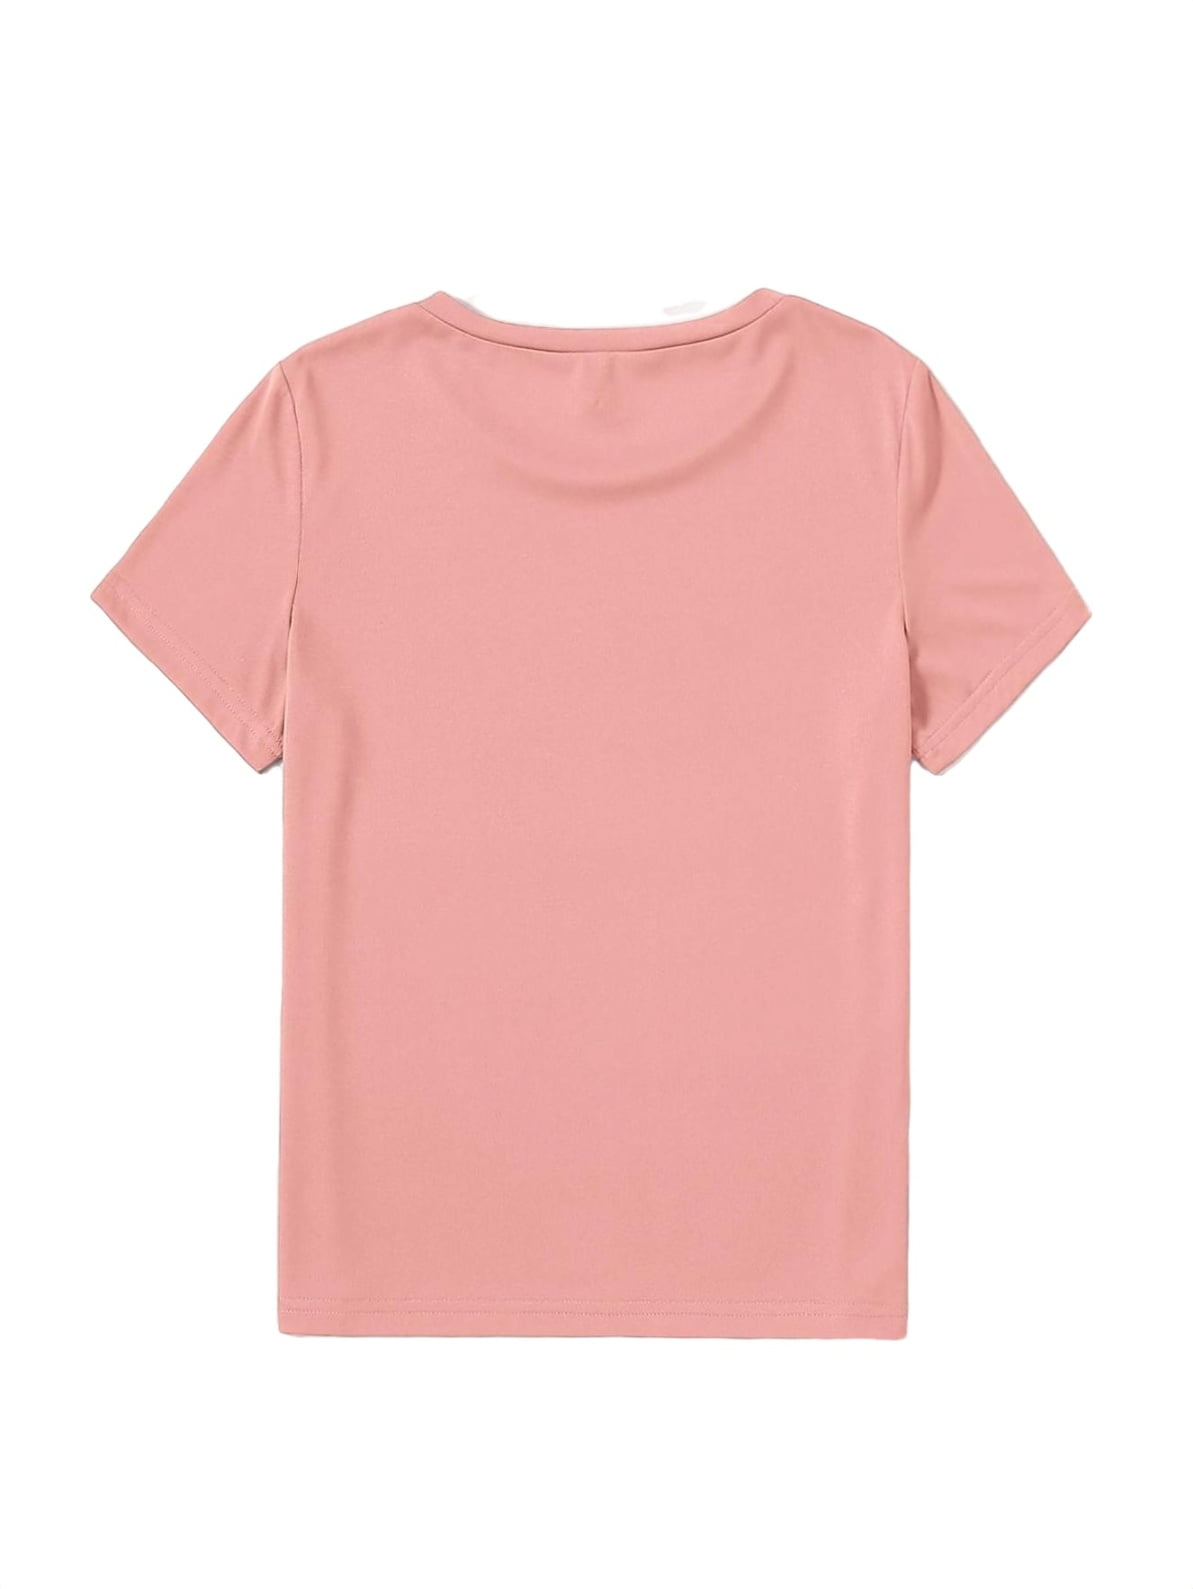 Sleeve T-Shirts Round Pink Coral Short Women\'s Basics Neck Plain